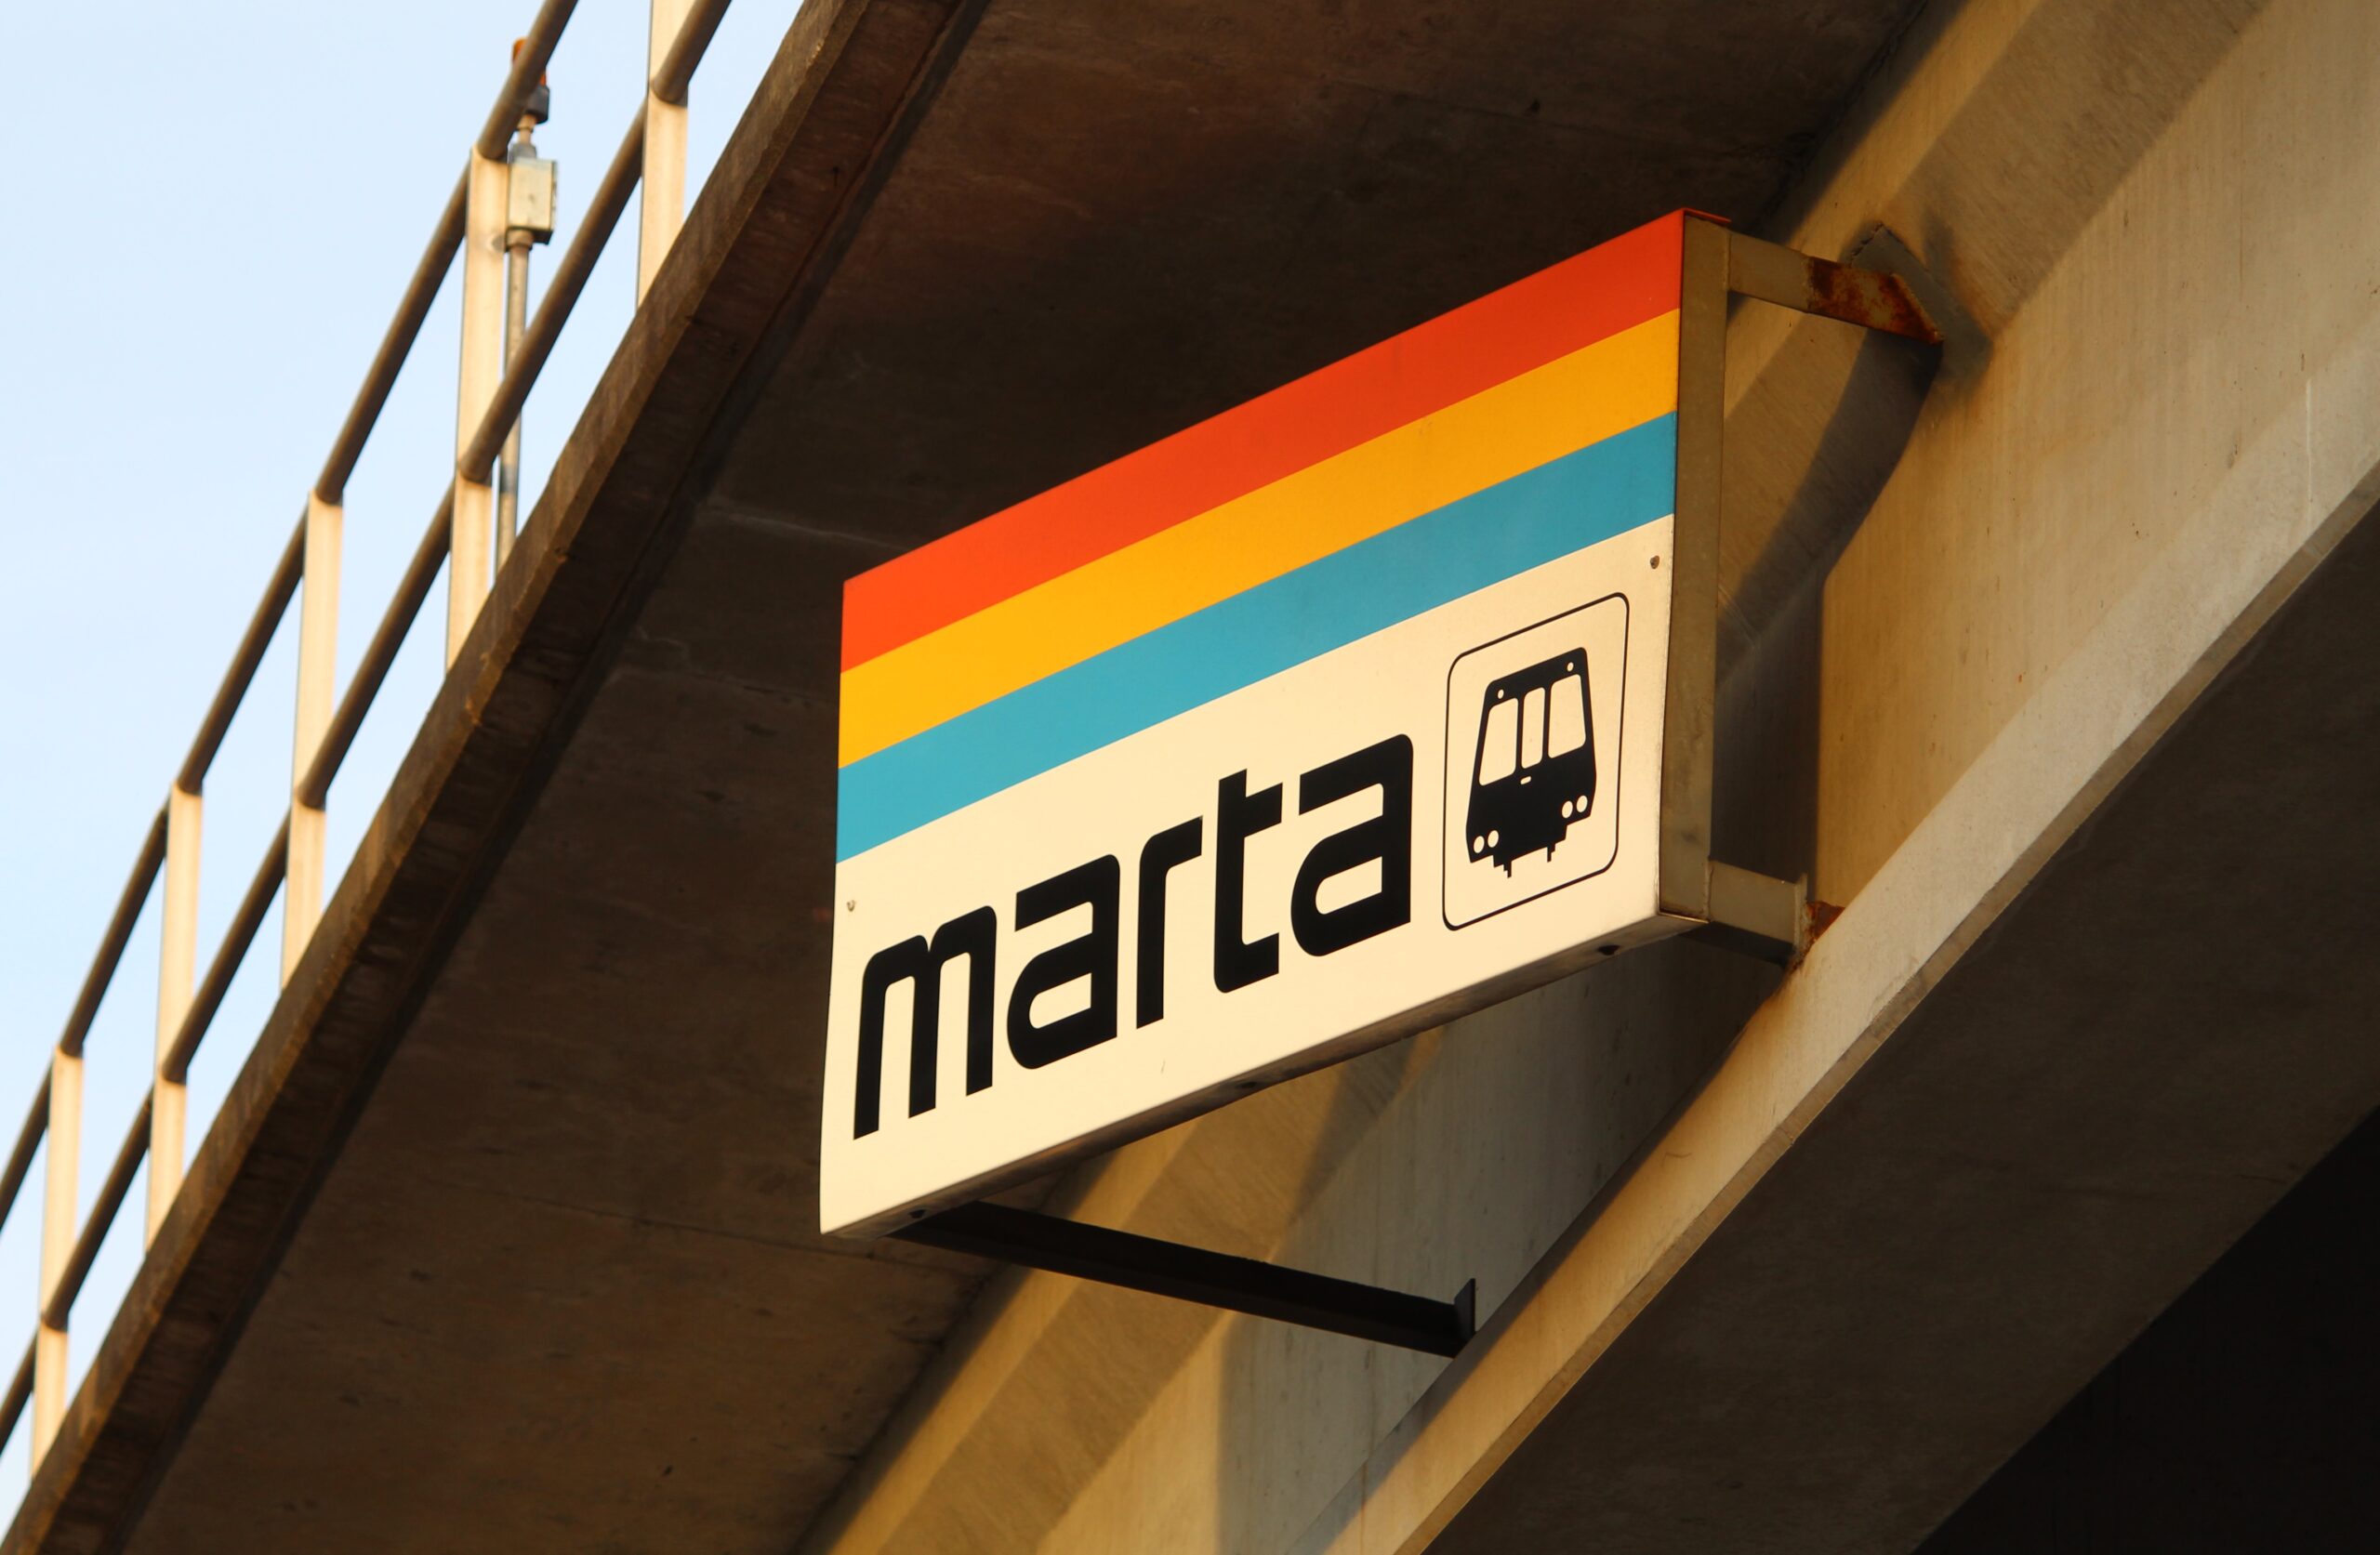 MARTA sign